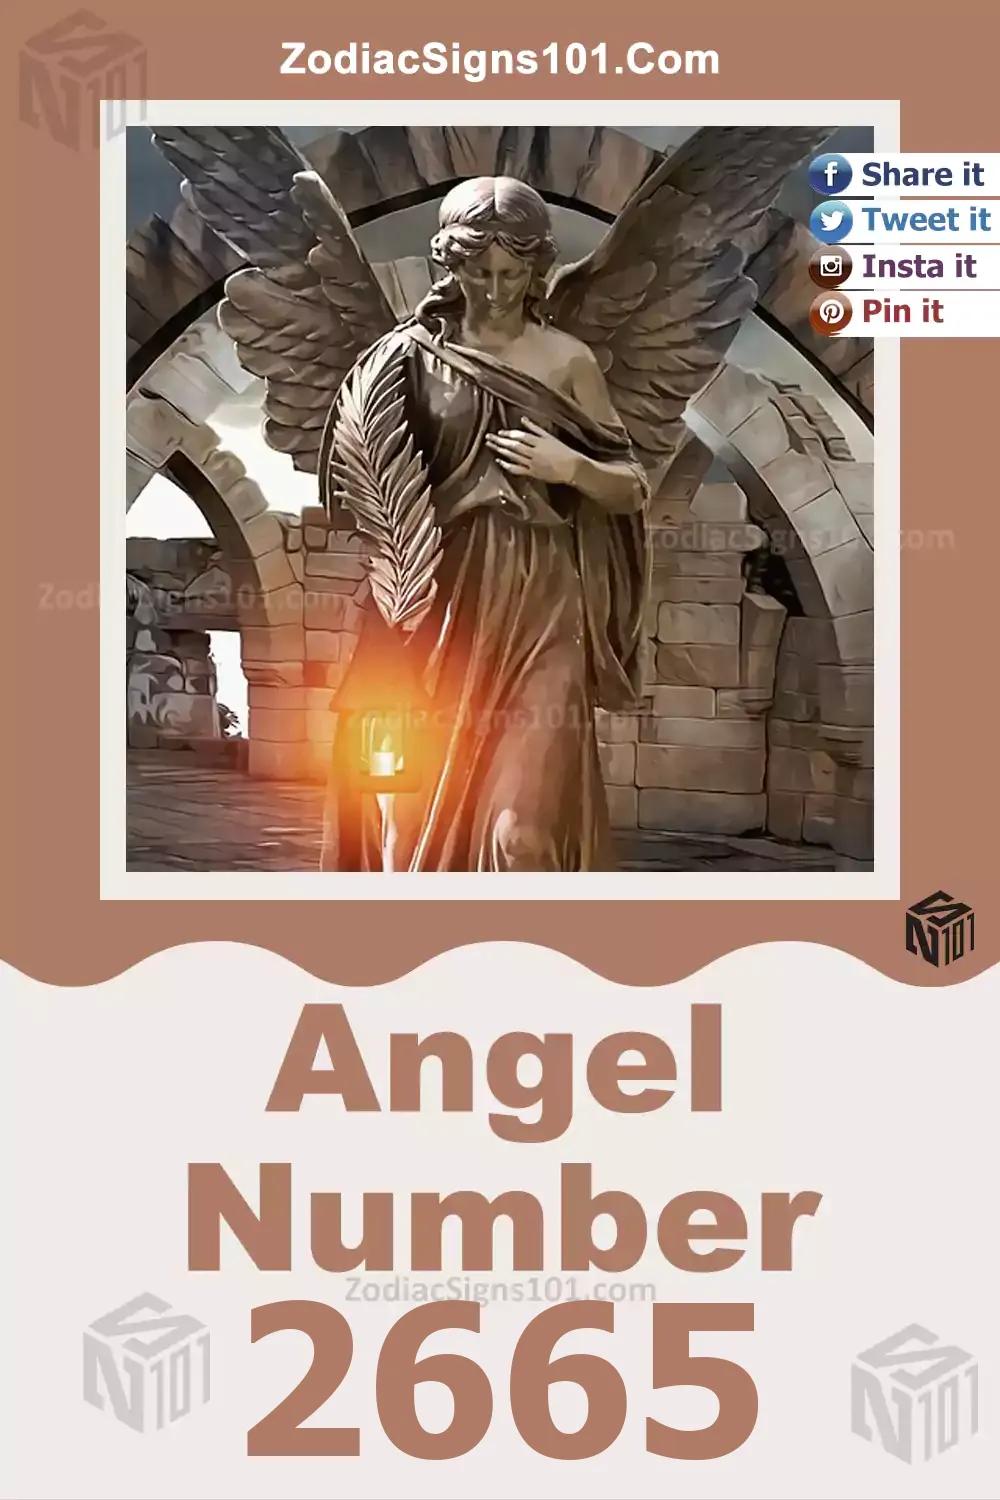 2665-Angel-Number-Meaning.jpg